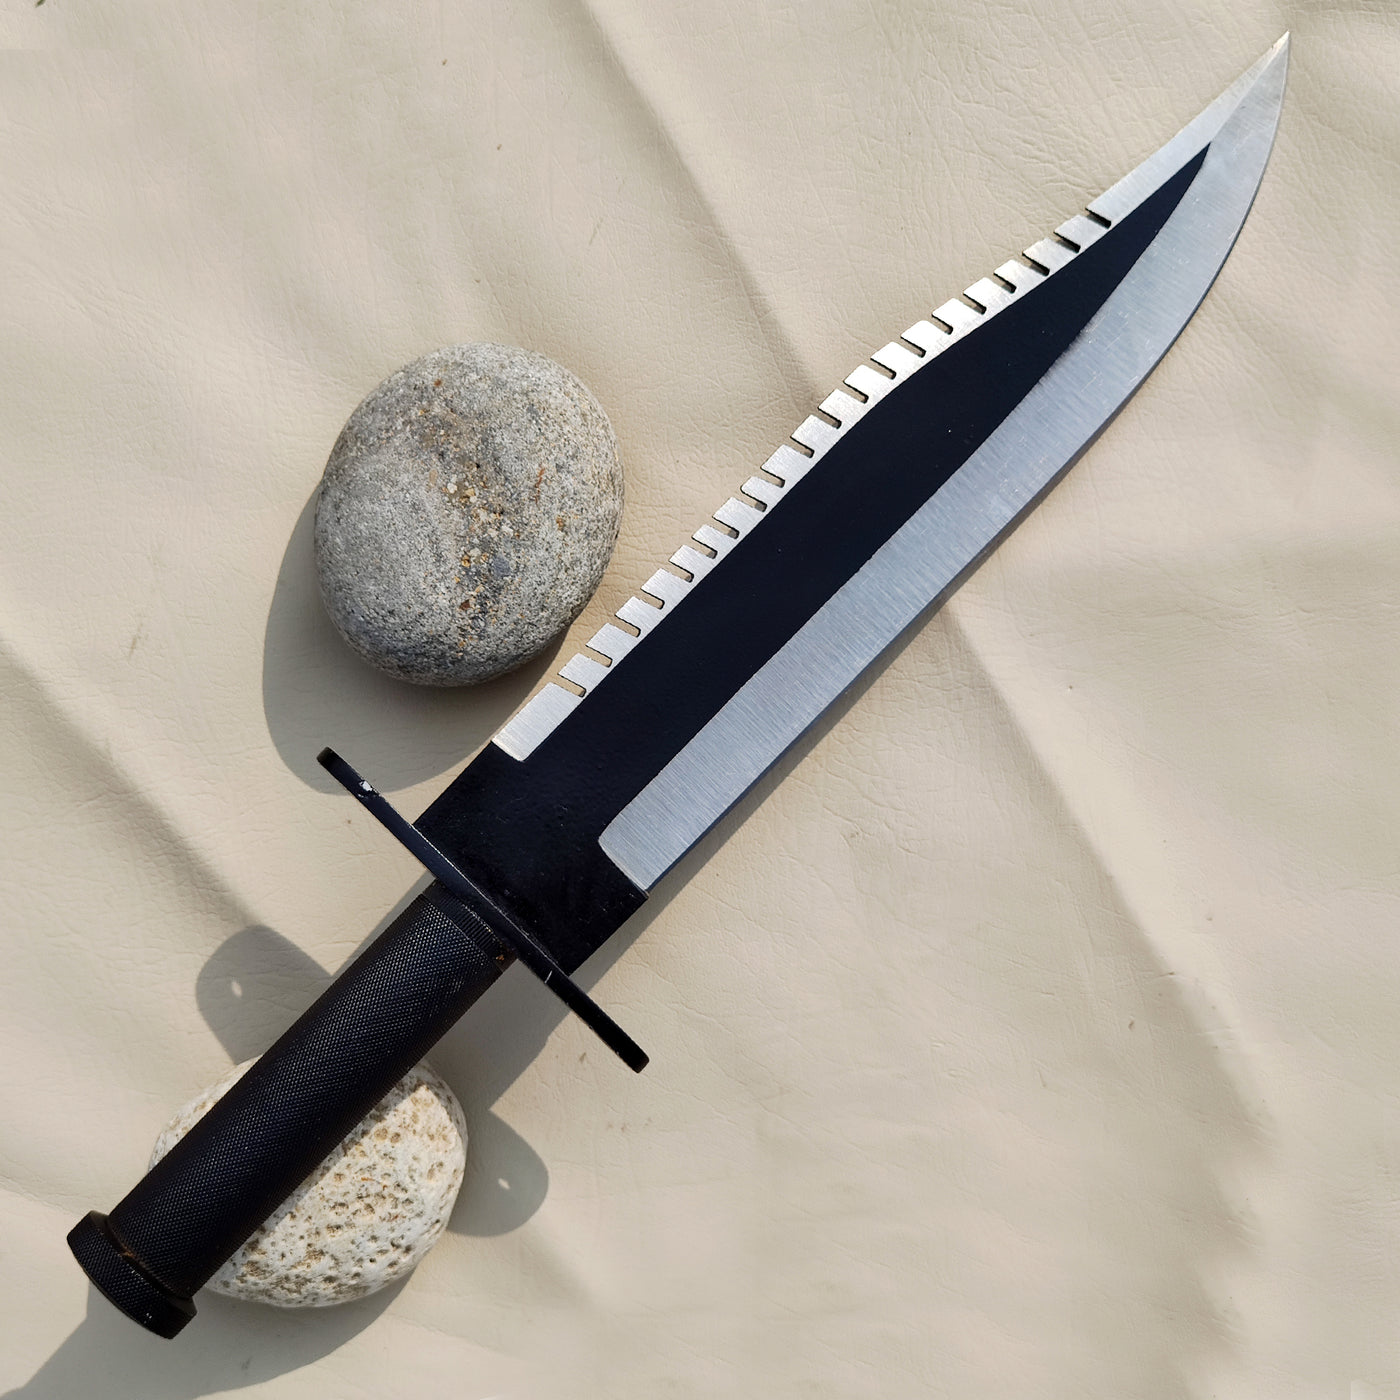 rambo bowie knife